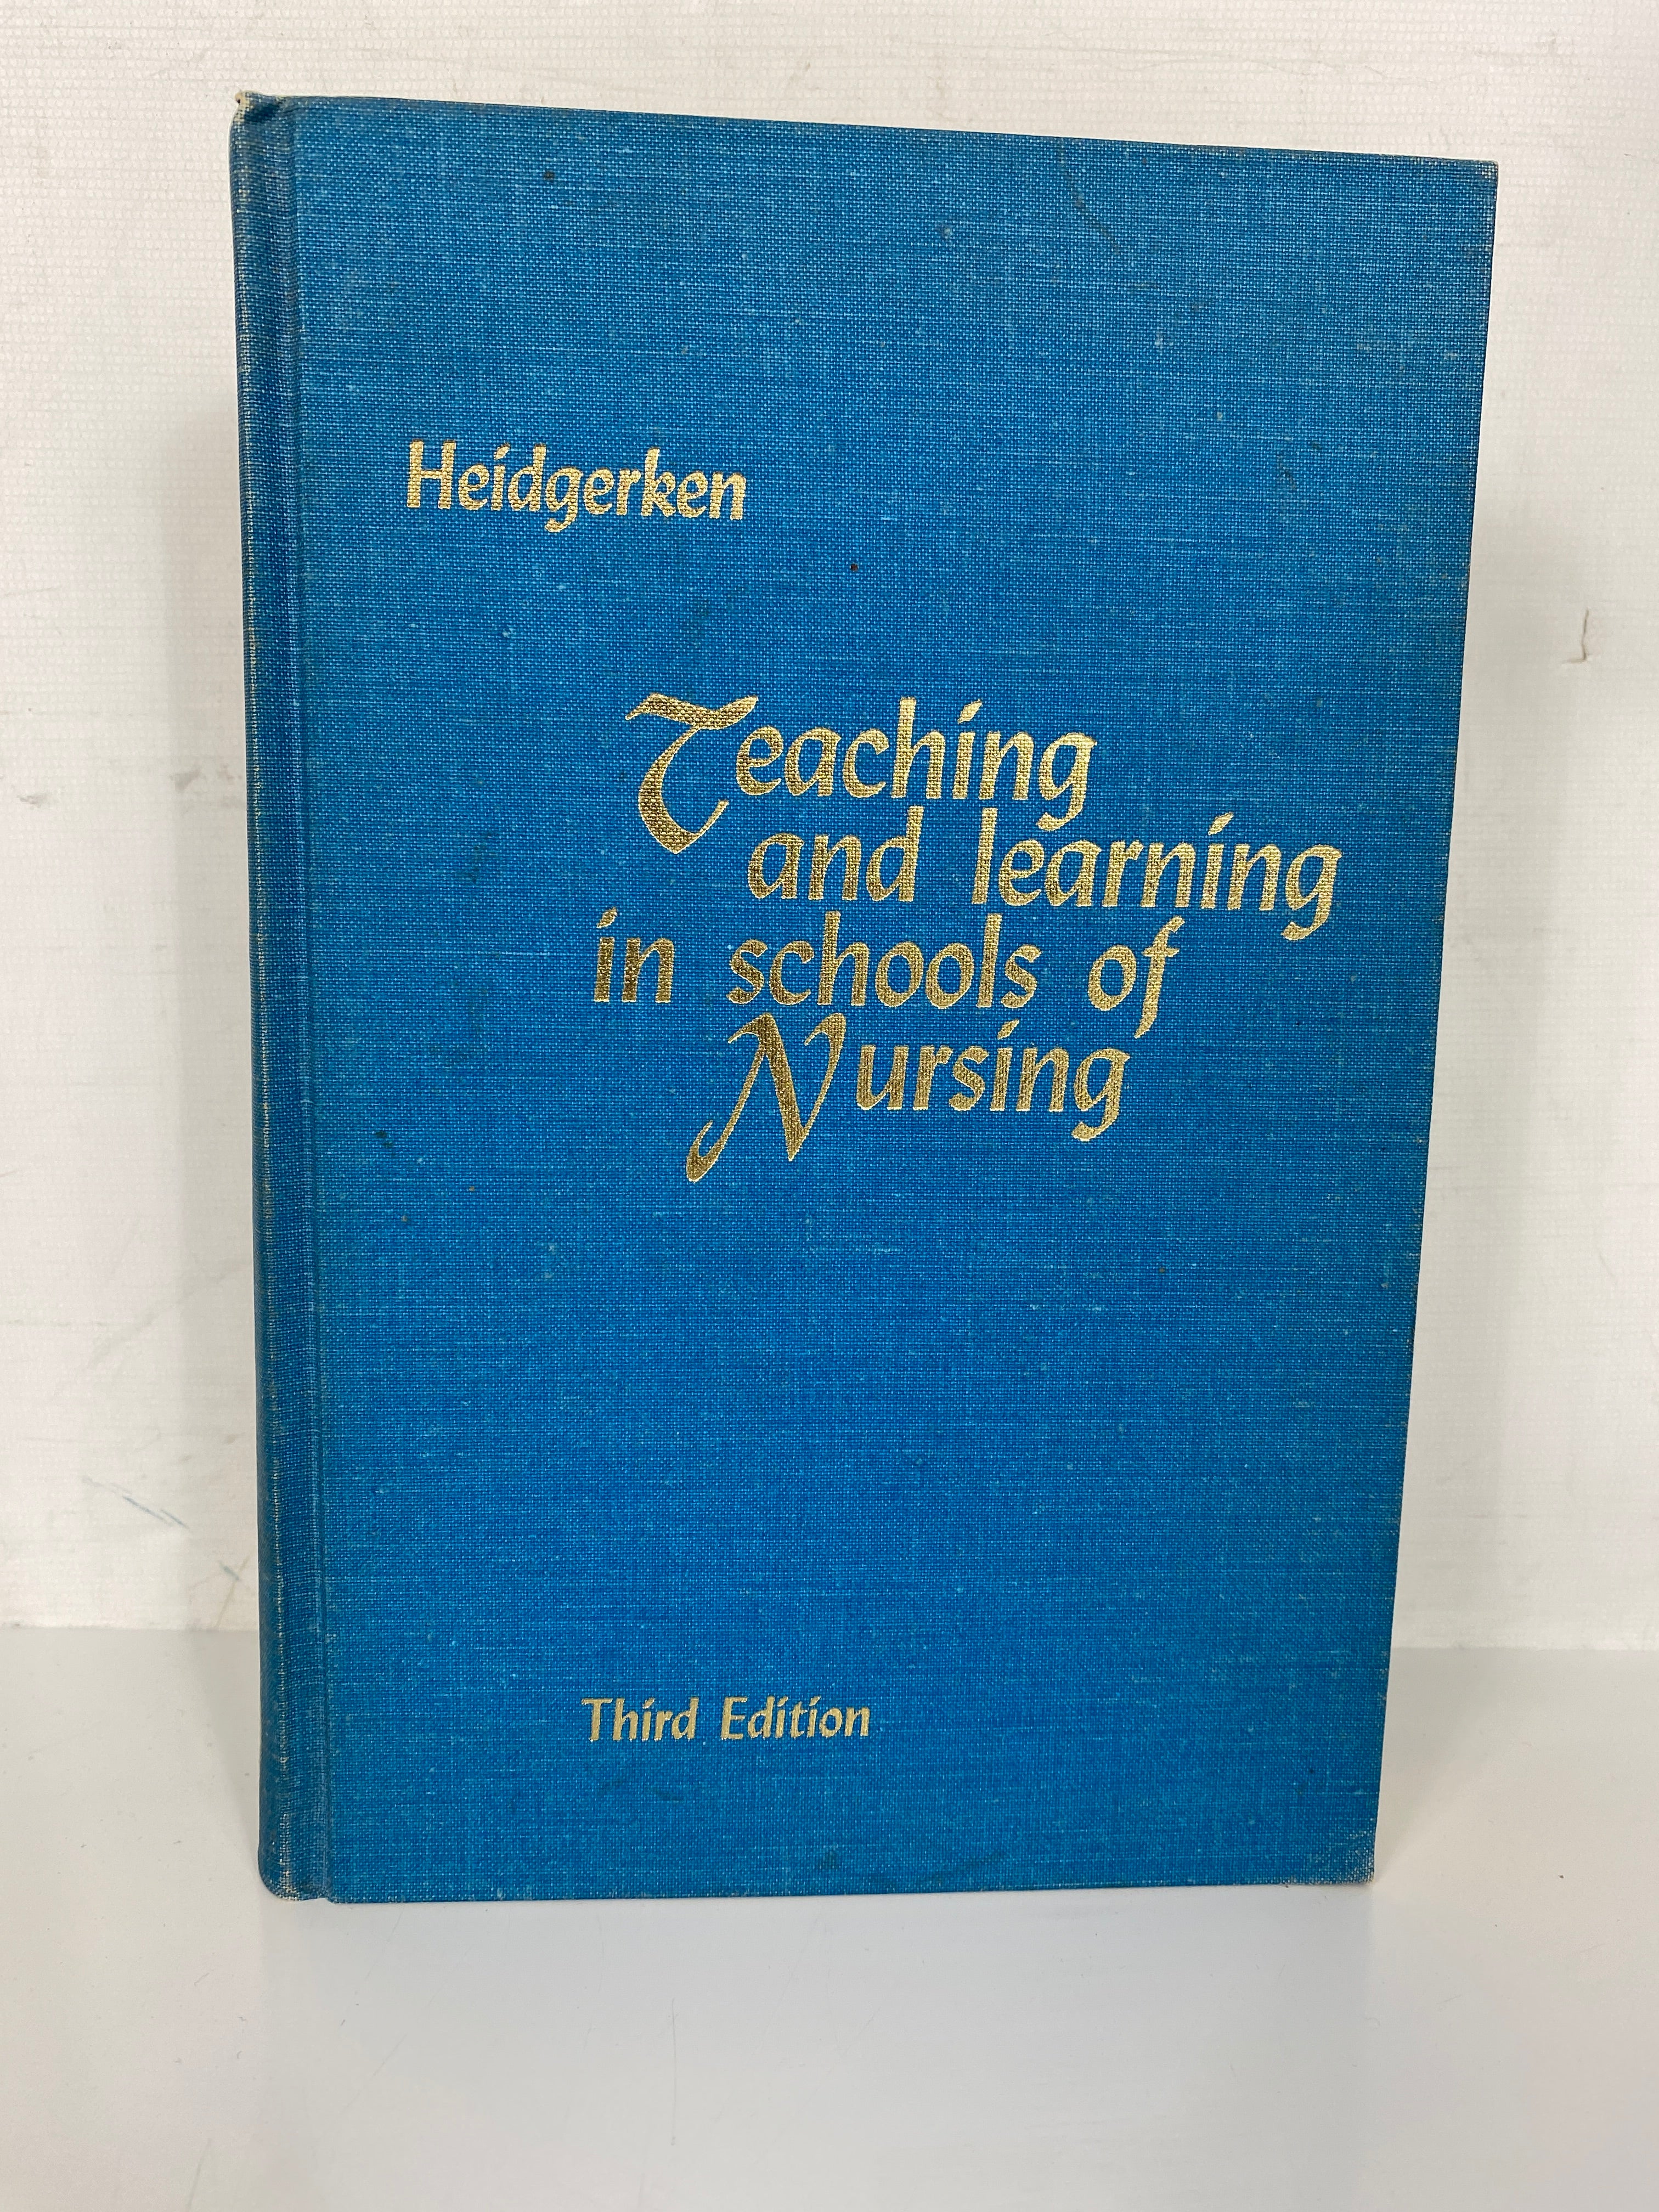 Teaching and Learning in Schools of Nursing by Heidgerken Third Edition (1965) HC